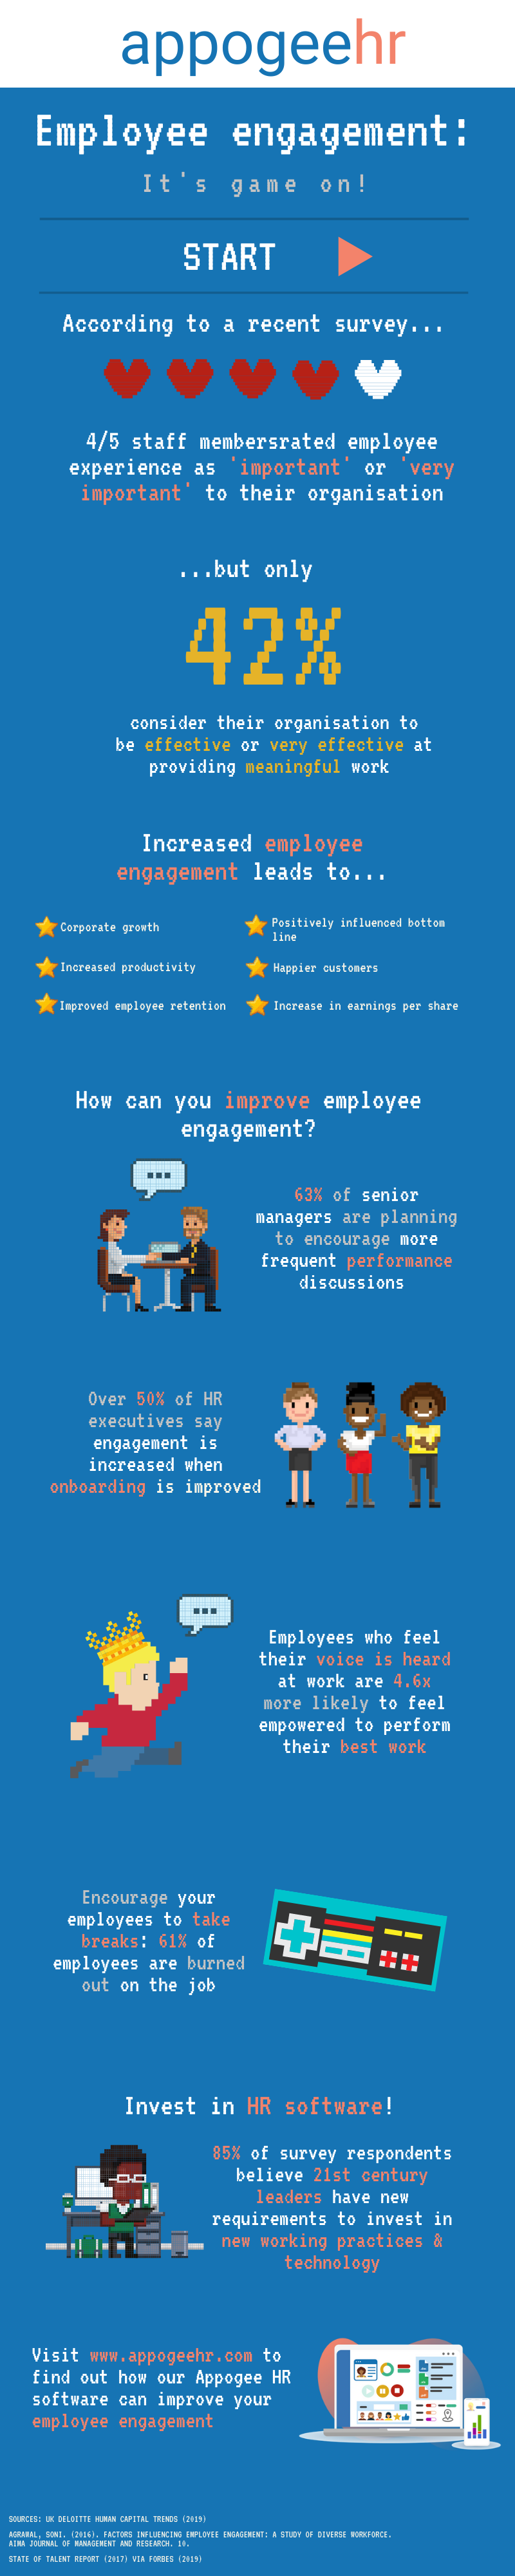 New brand - Employee Engagement Infographic